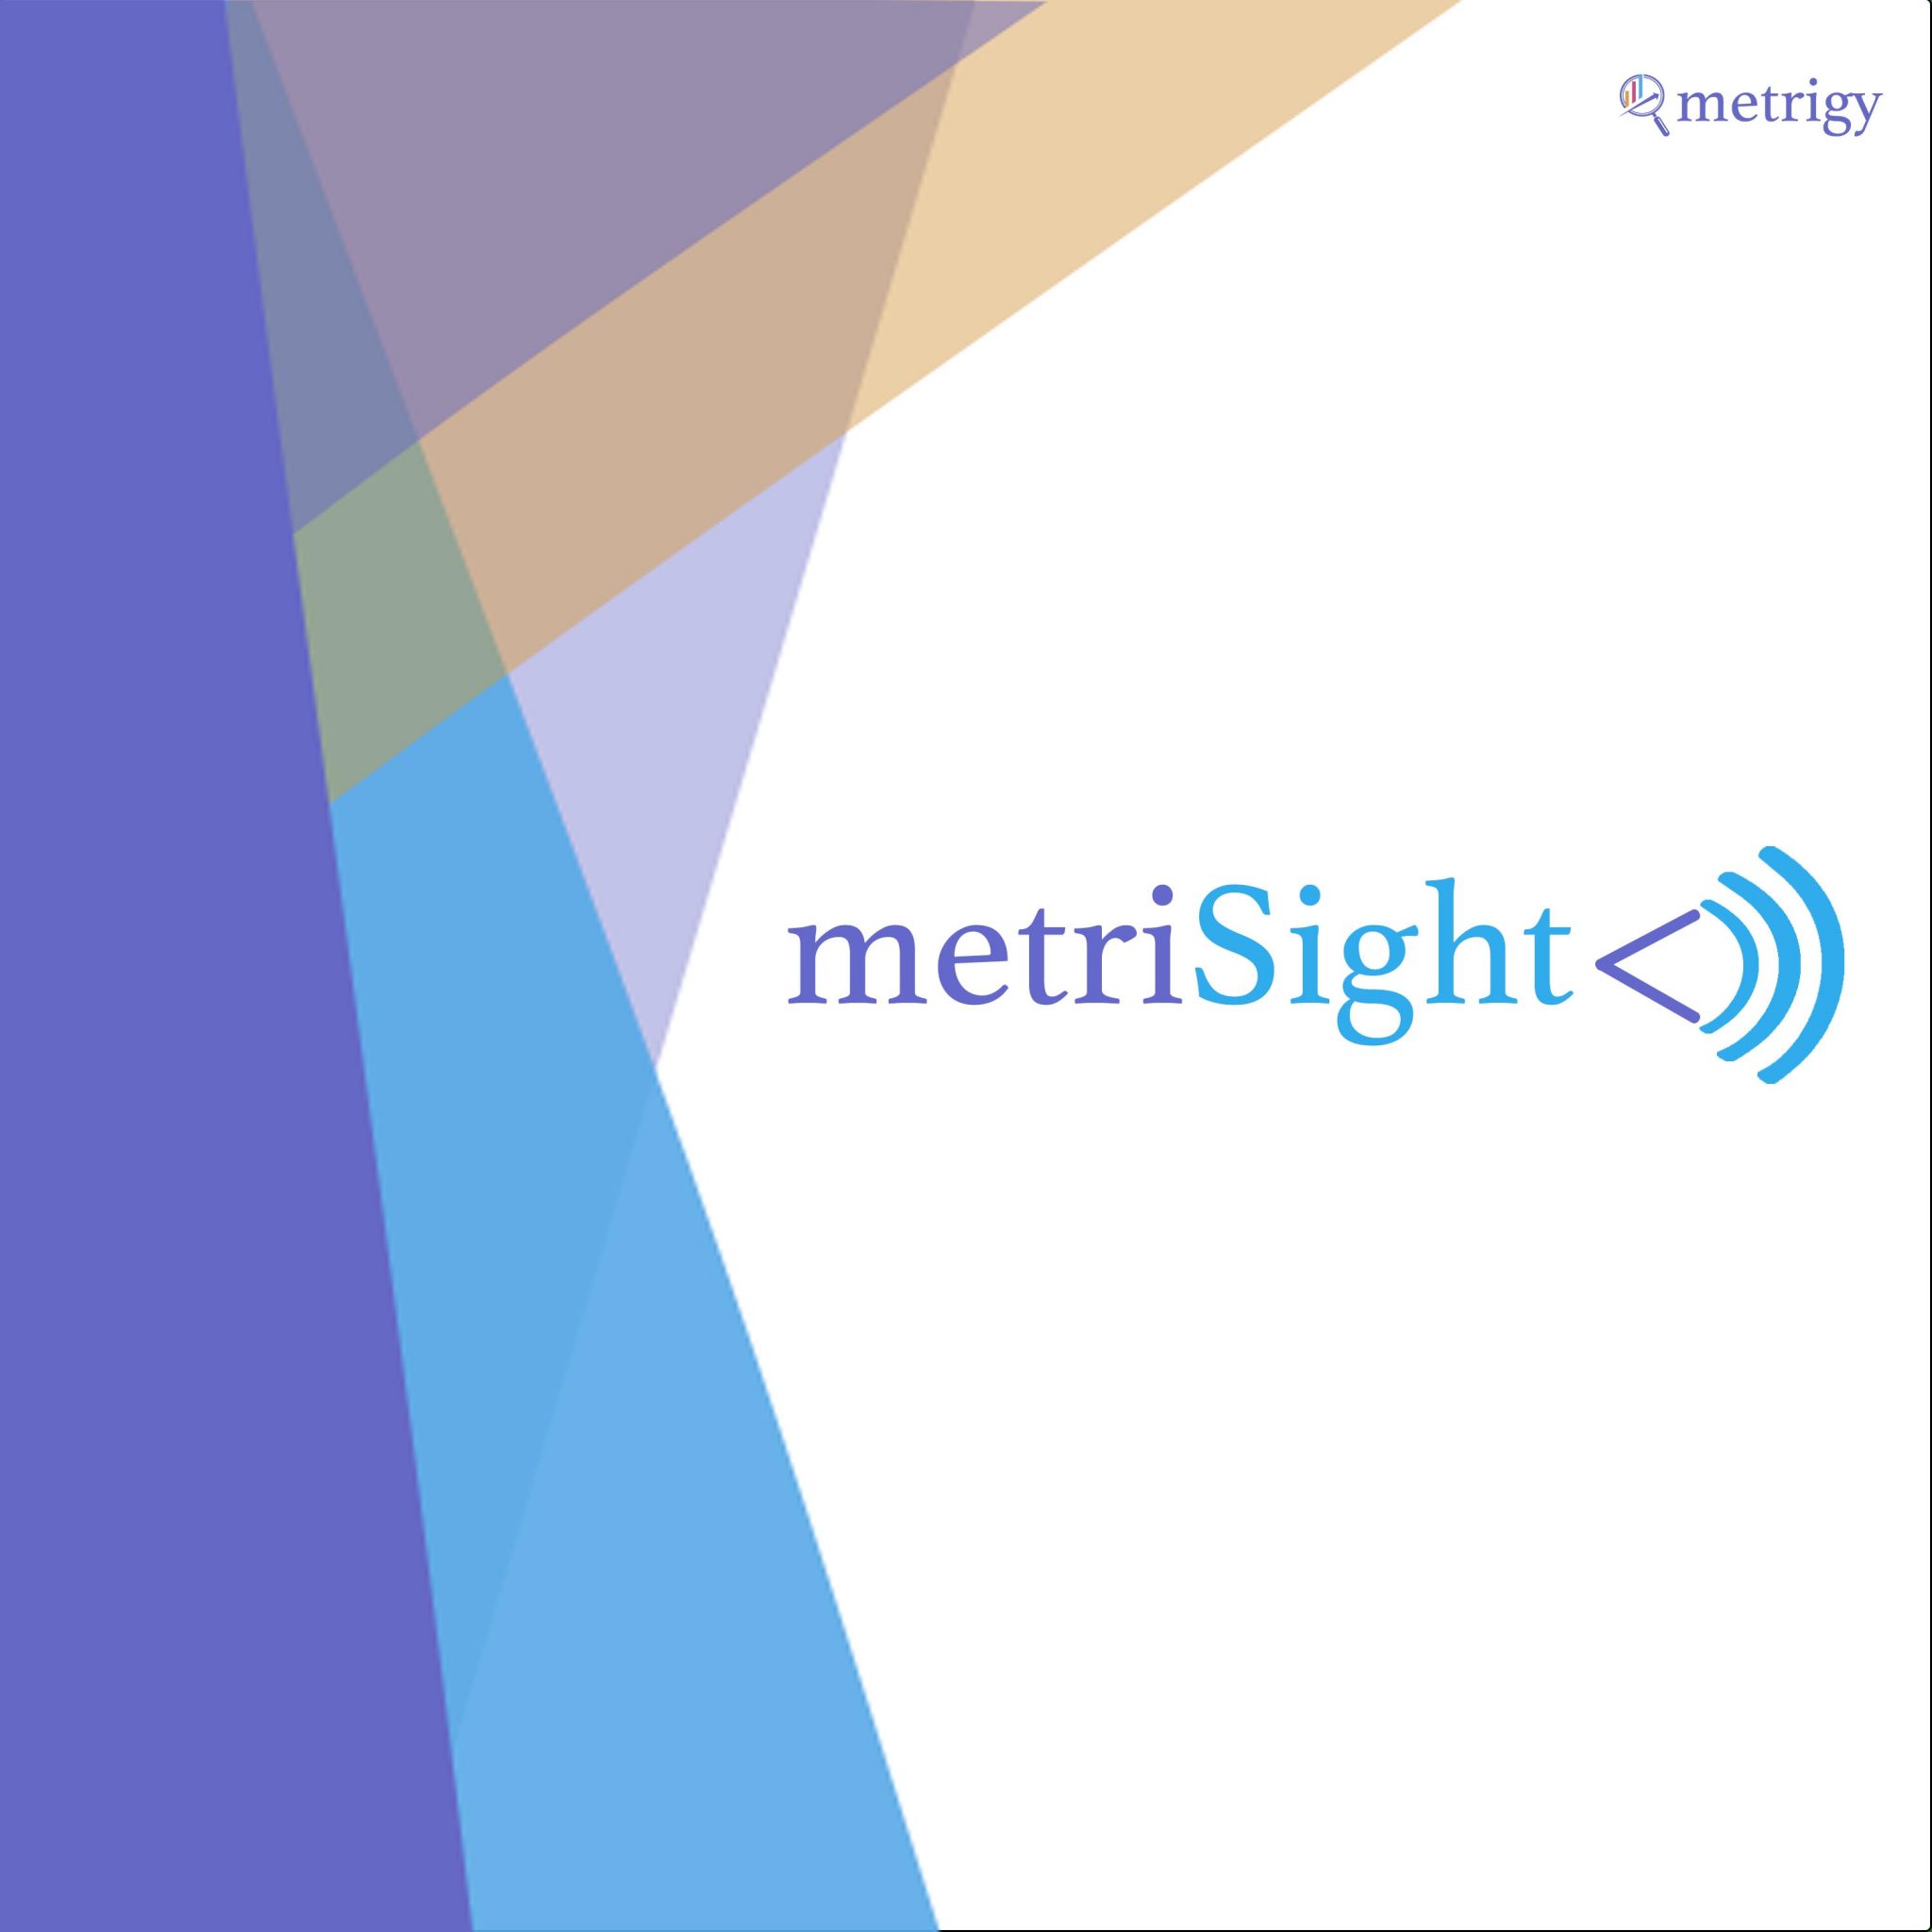 MetriSight Ep.21 - Talking Data with Metrigy's New Team Members